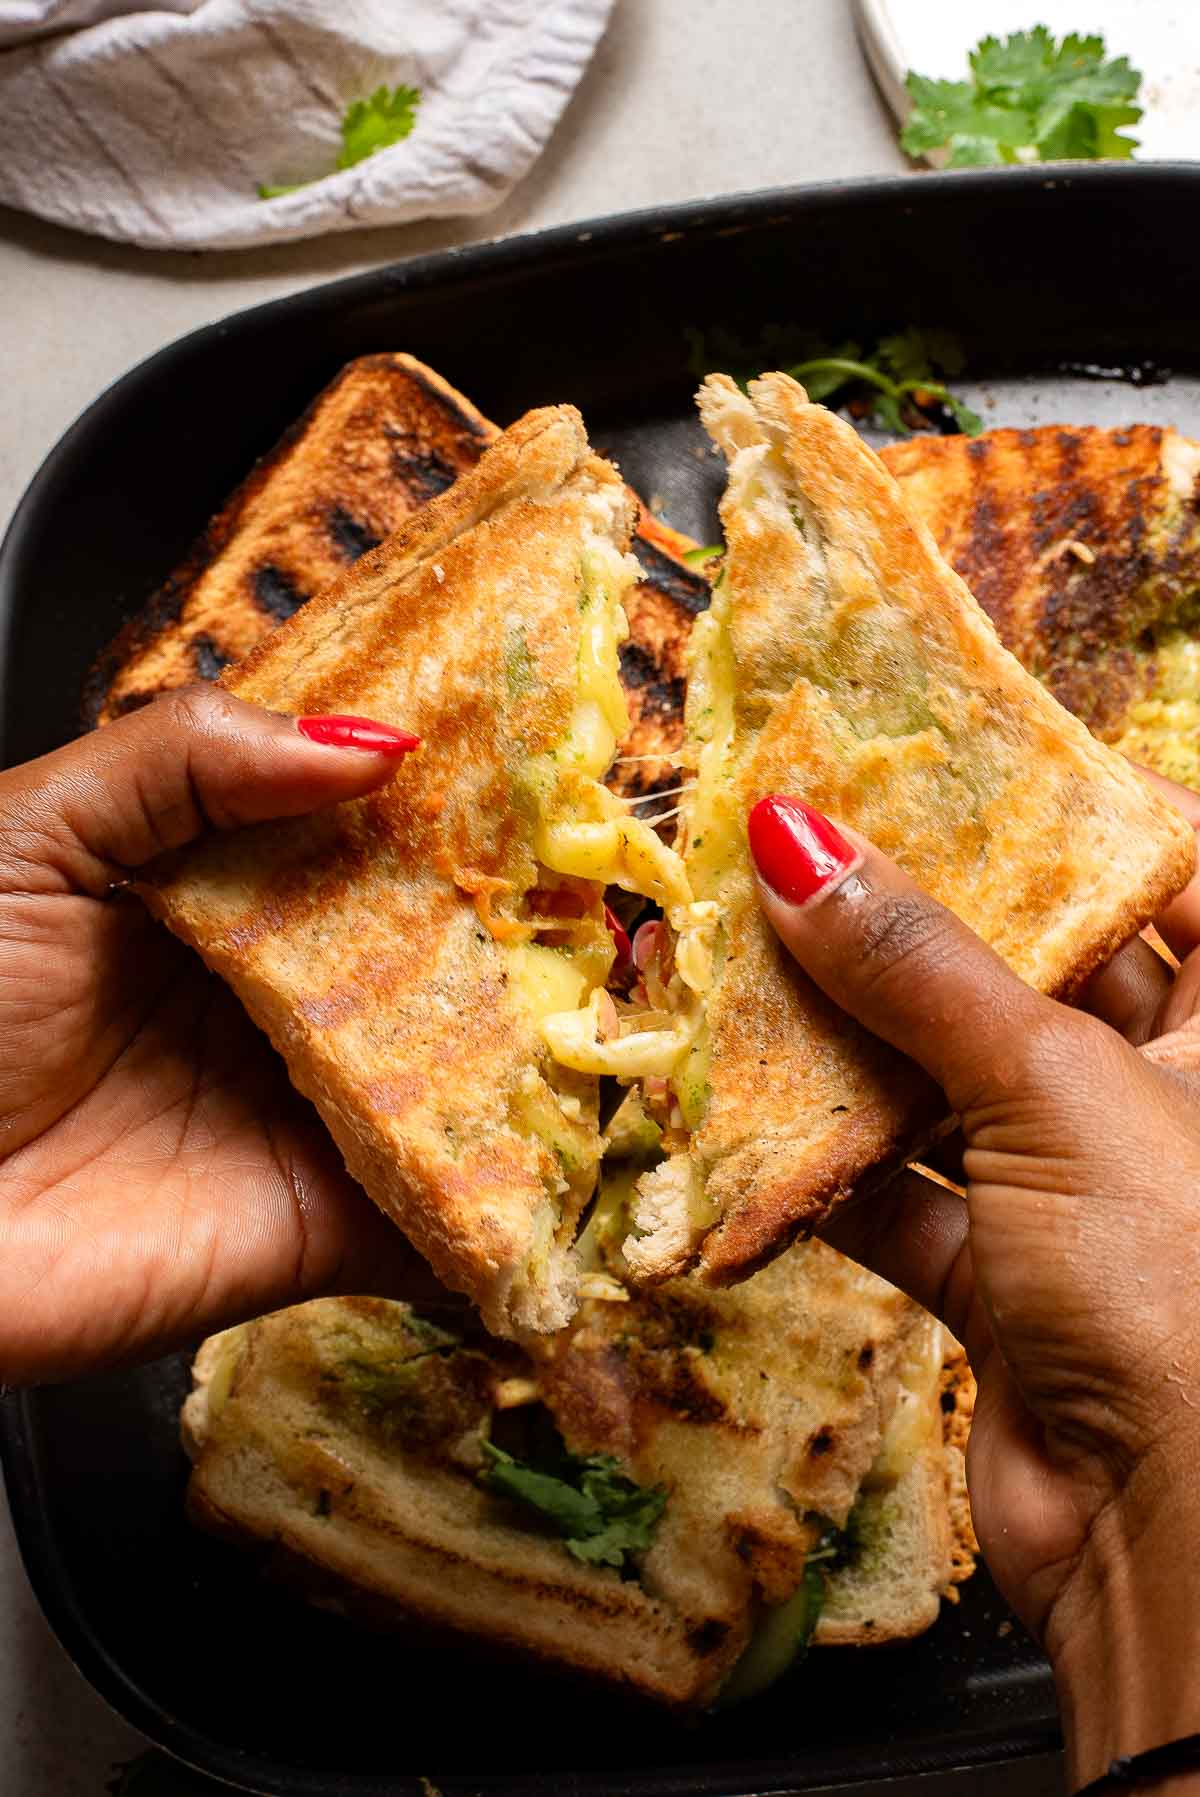 Hands pulling apart a Bombay Sandwich.